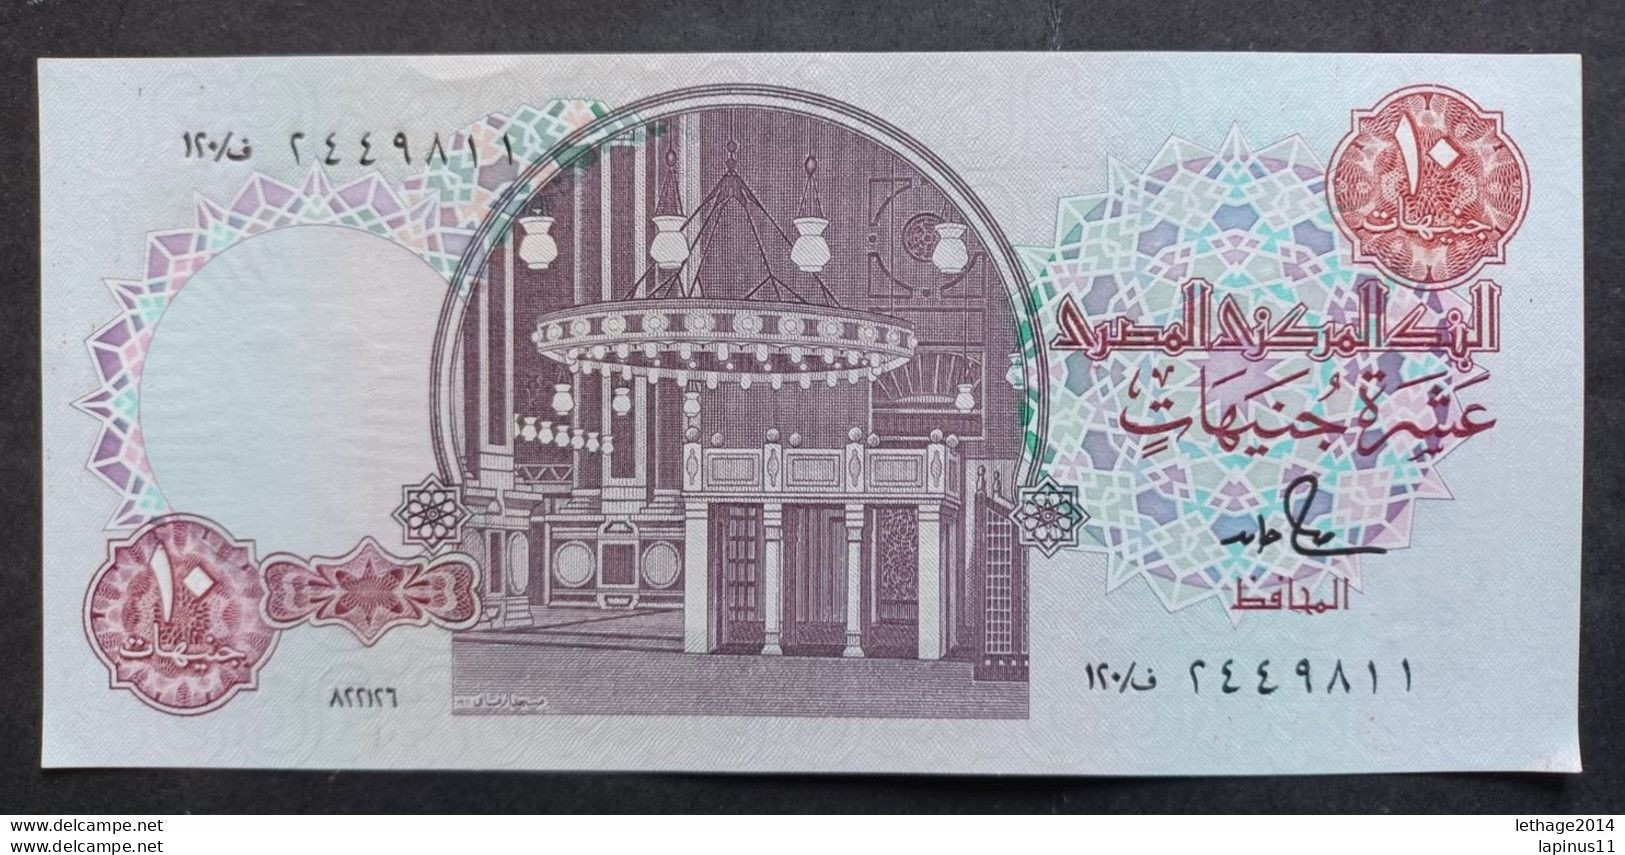 BANKNOTE SAUDI ARABIA 10 RIYAL KING FAISAL 1984 UNCIRCOLATED - Arabia Saudita